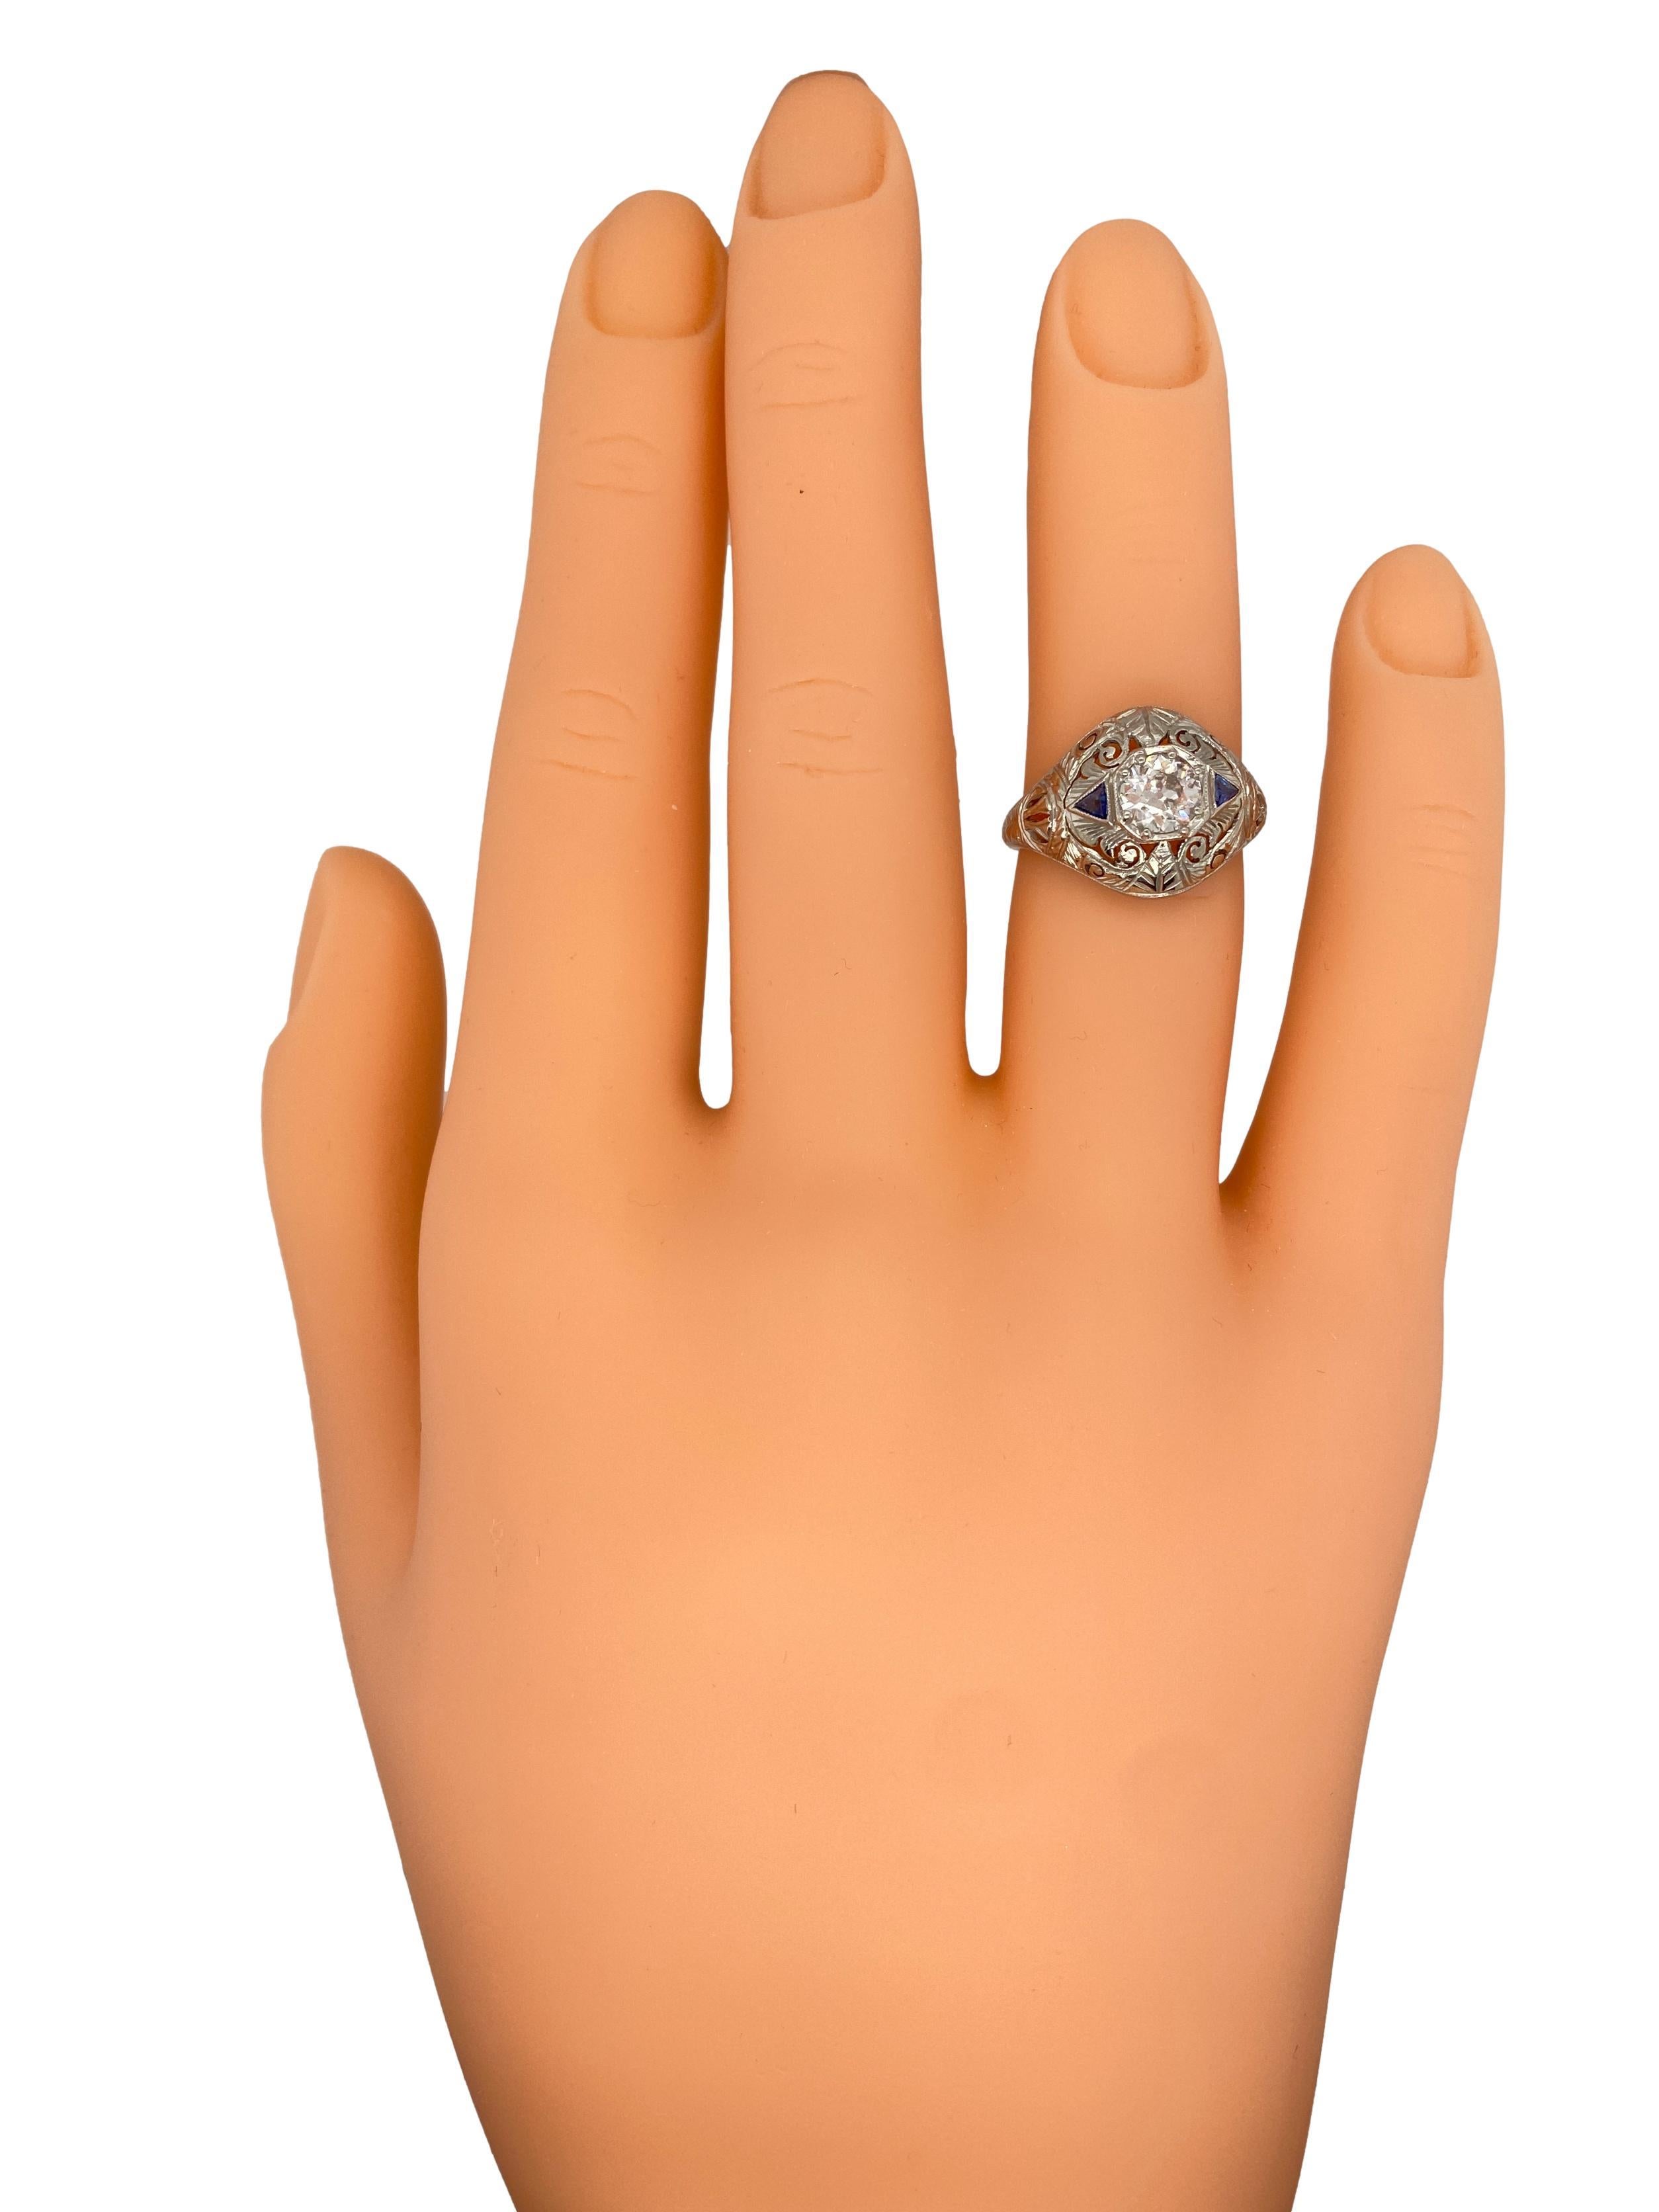 Circa 1920s Art Deco 0.65 Carat Diamond and Sapphire Ring in Platinum For Sale 1